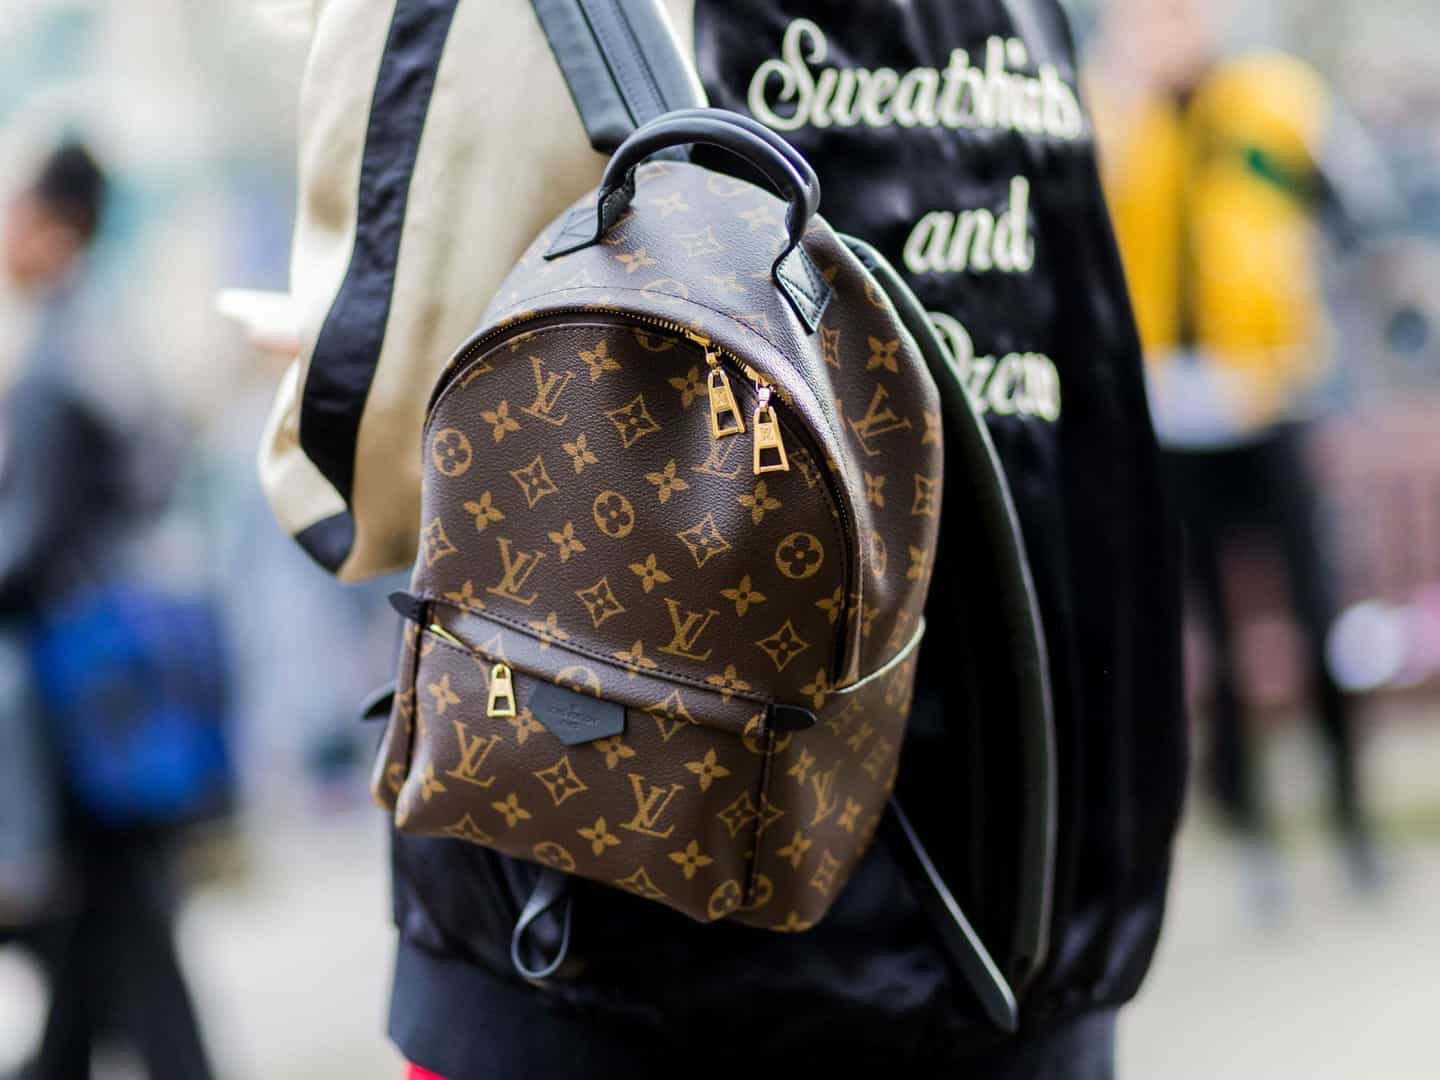 Replica Louis Vuitton Backpack for Men & Women,Fake LV Backpack